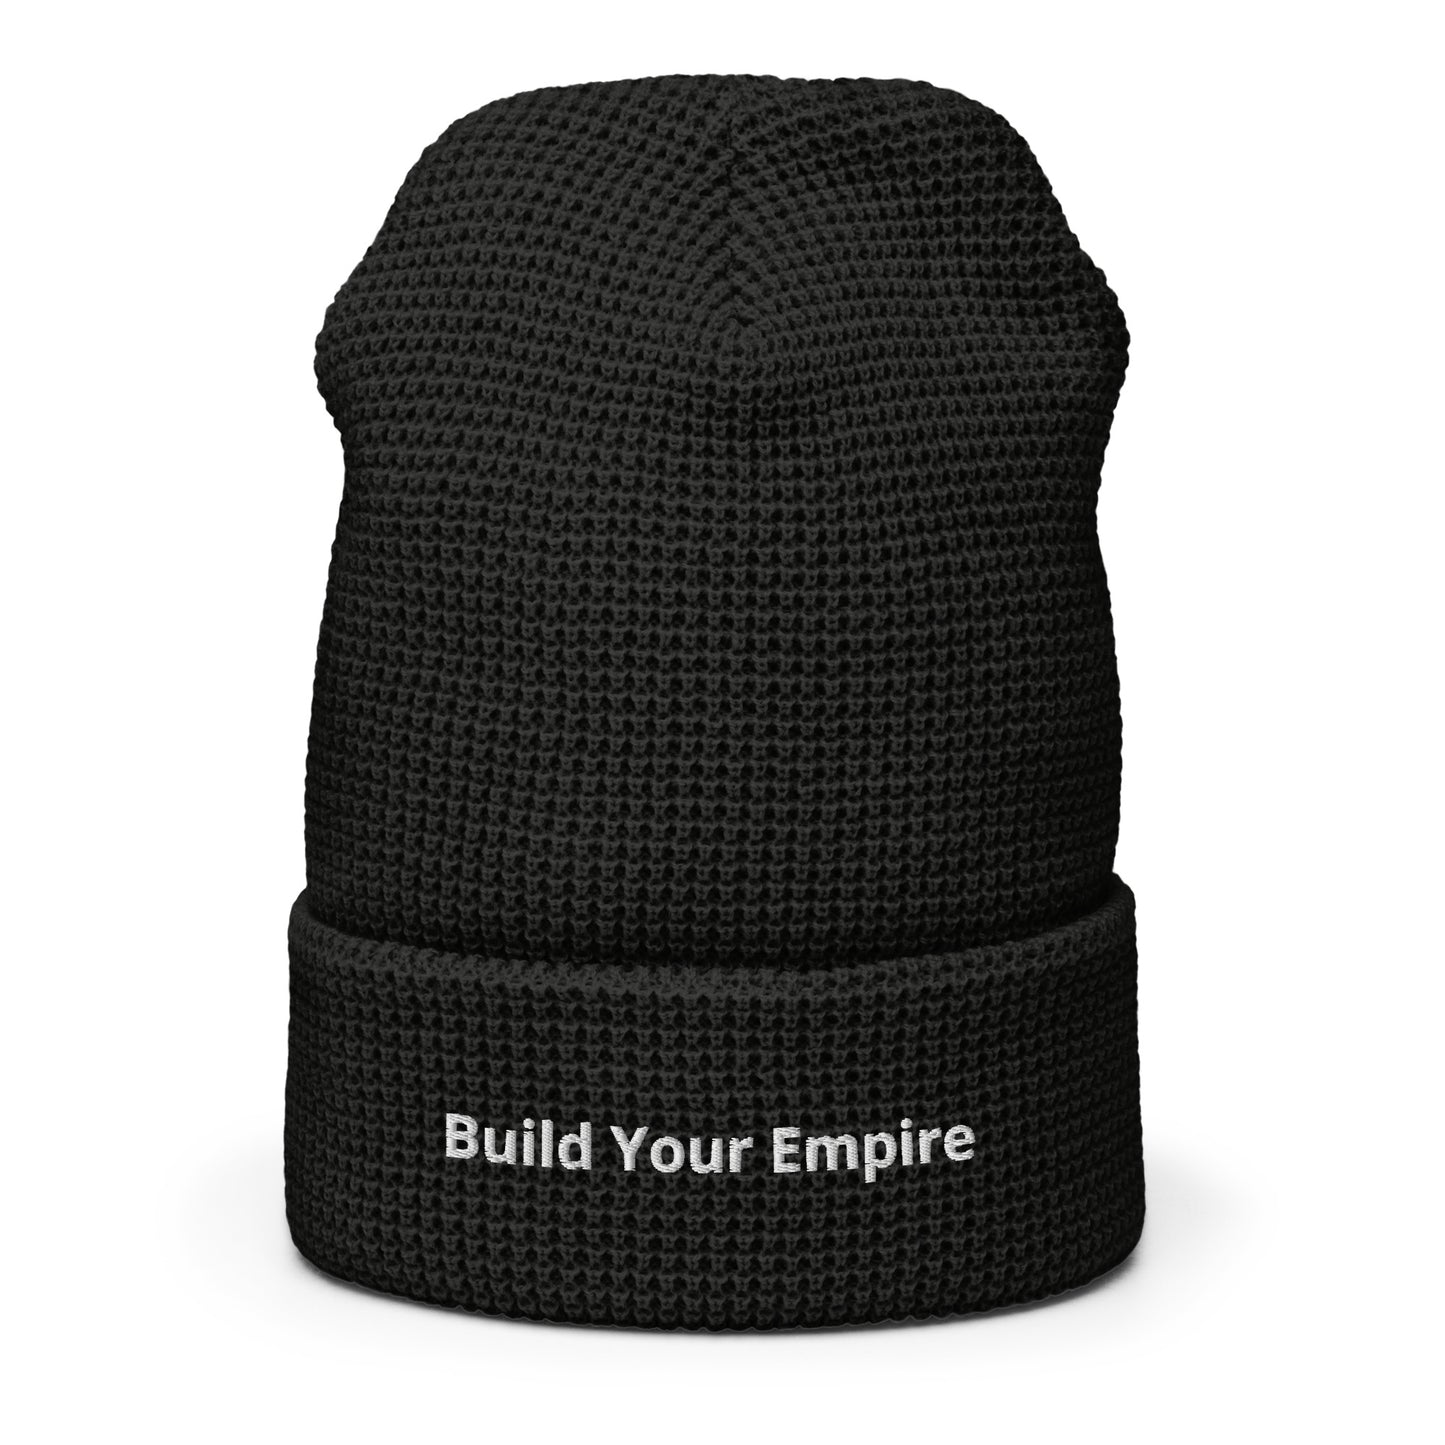 Build Your Empire Beanie - Black/White